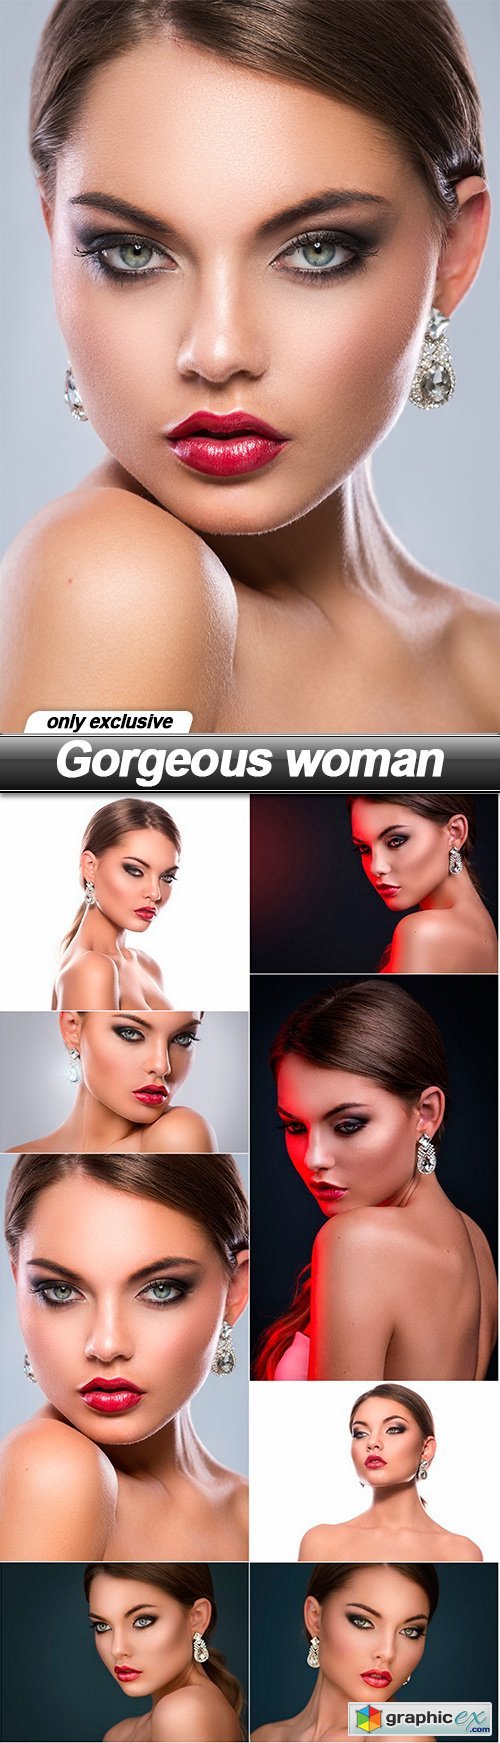 Gorgeous woman - 8 UHQ JPEG